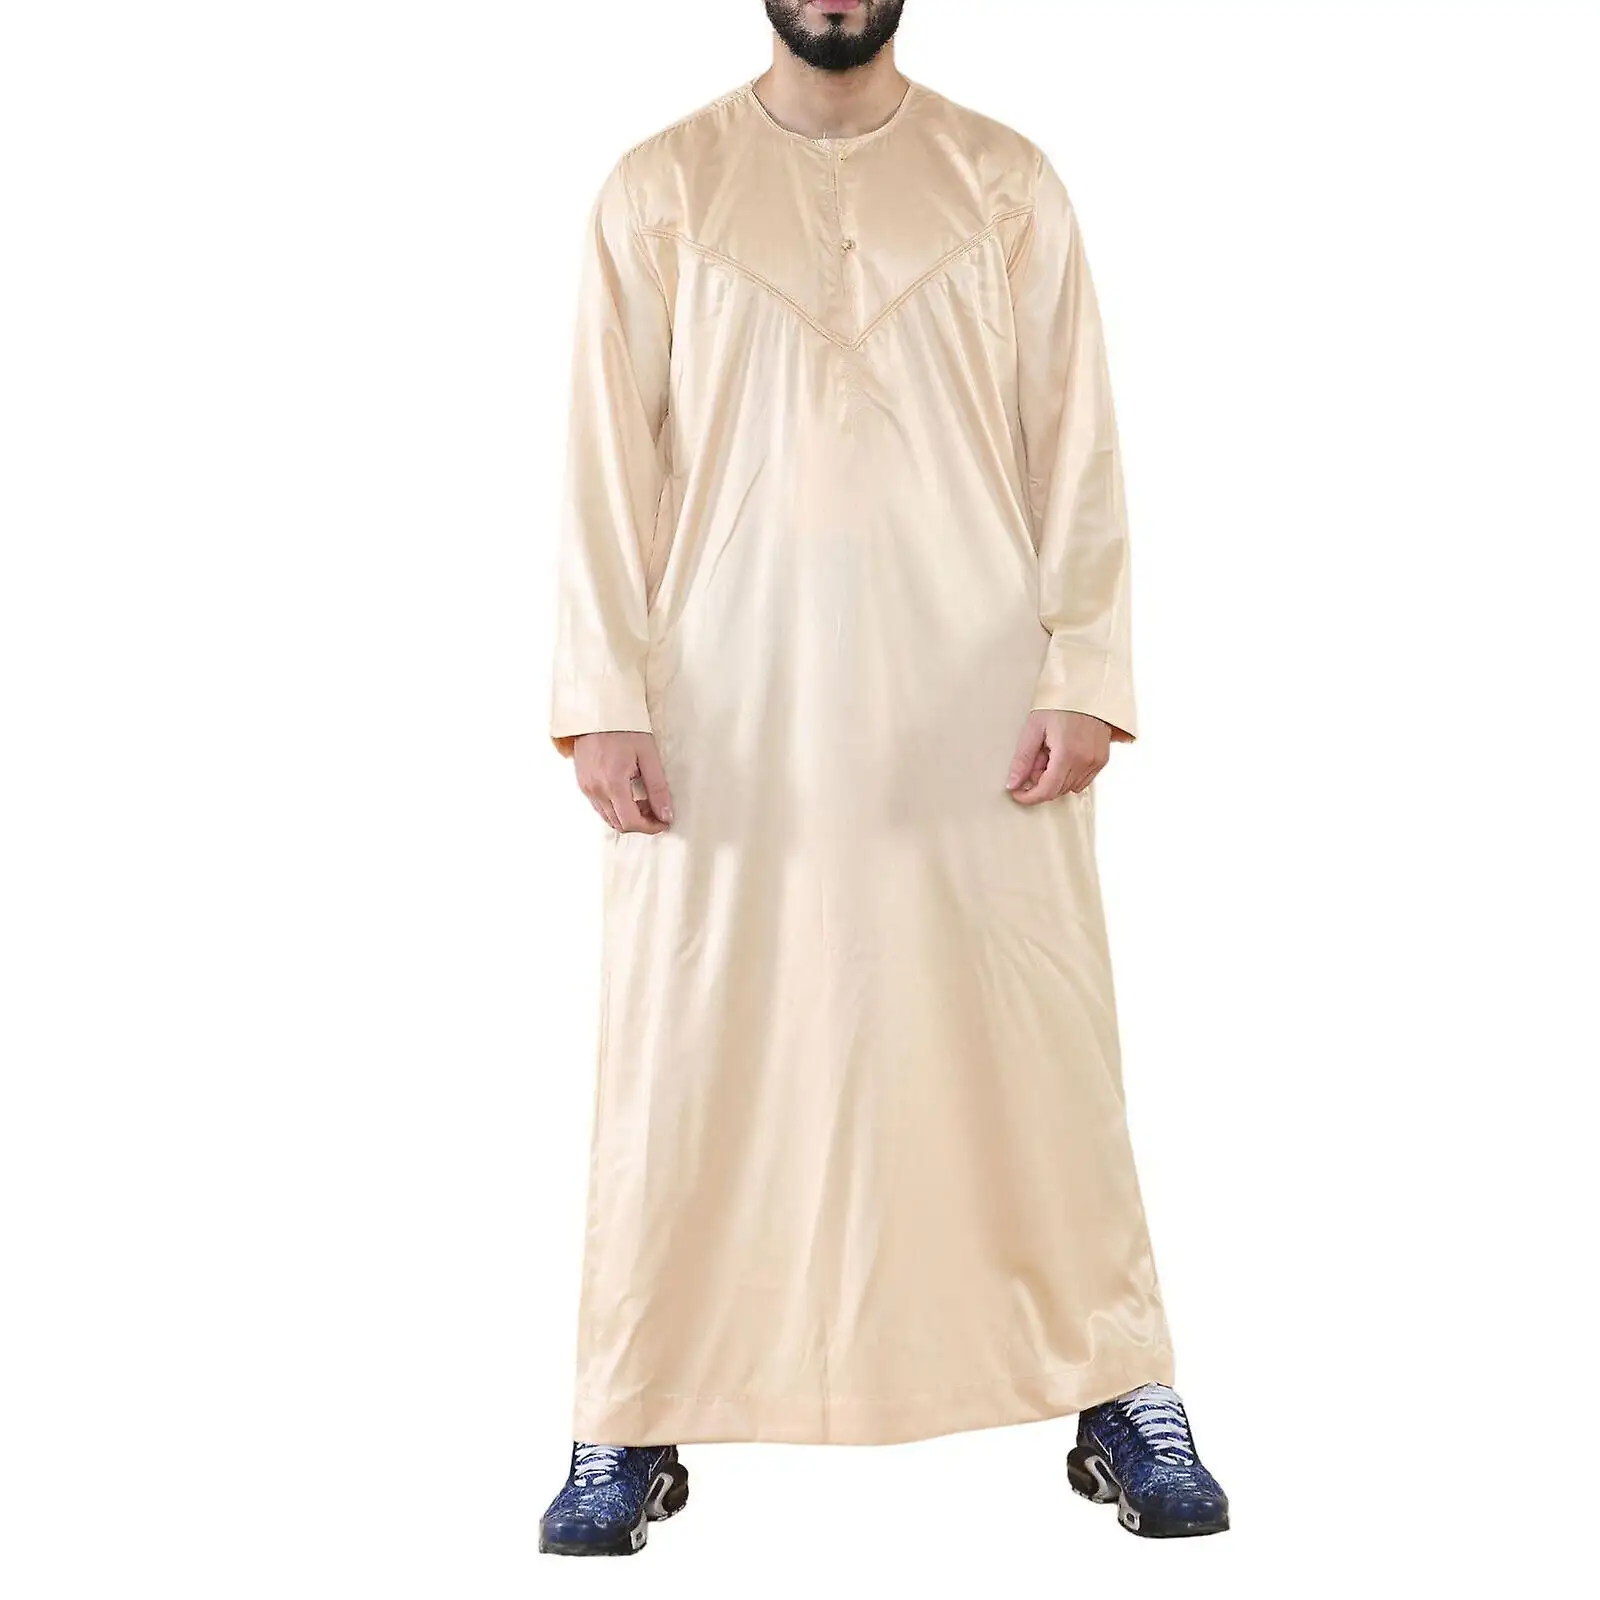 Transpirable ropa islámica saudí hombres Thobe vestido islámico hombres manga larga Thobe árabe Jubba al aire libre gran oferta vestido largo